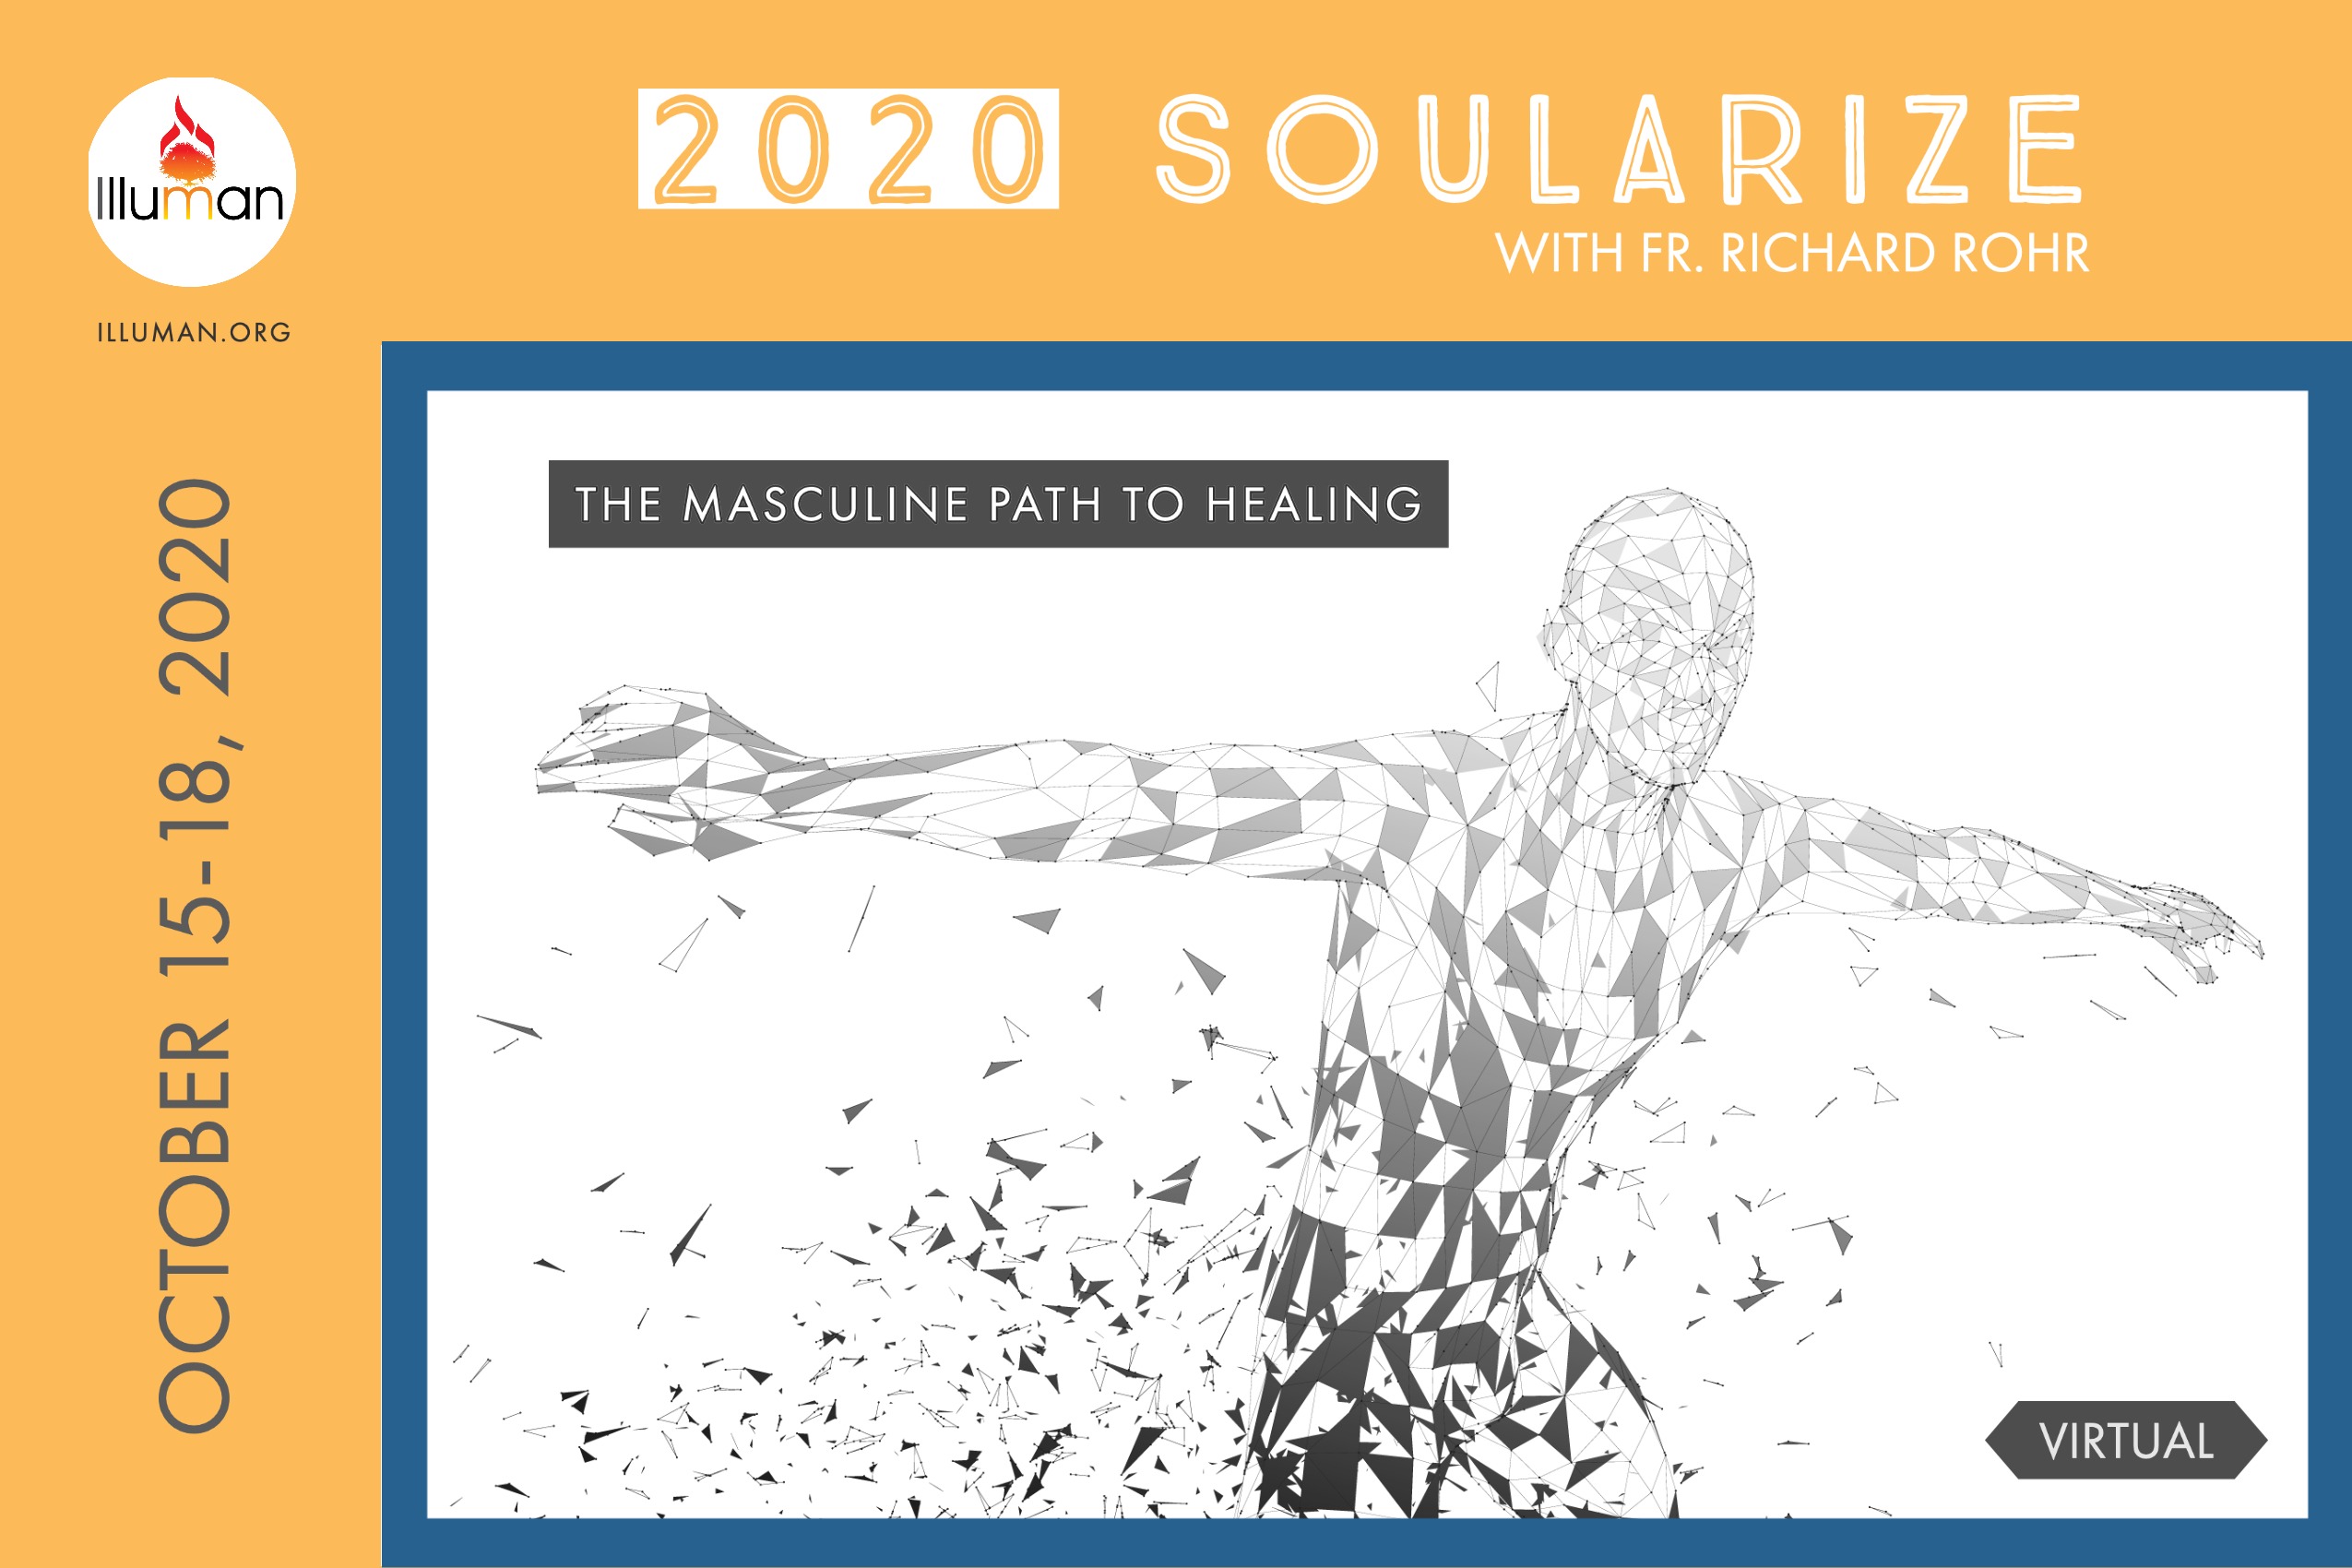 Soularize 2020